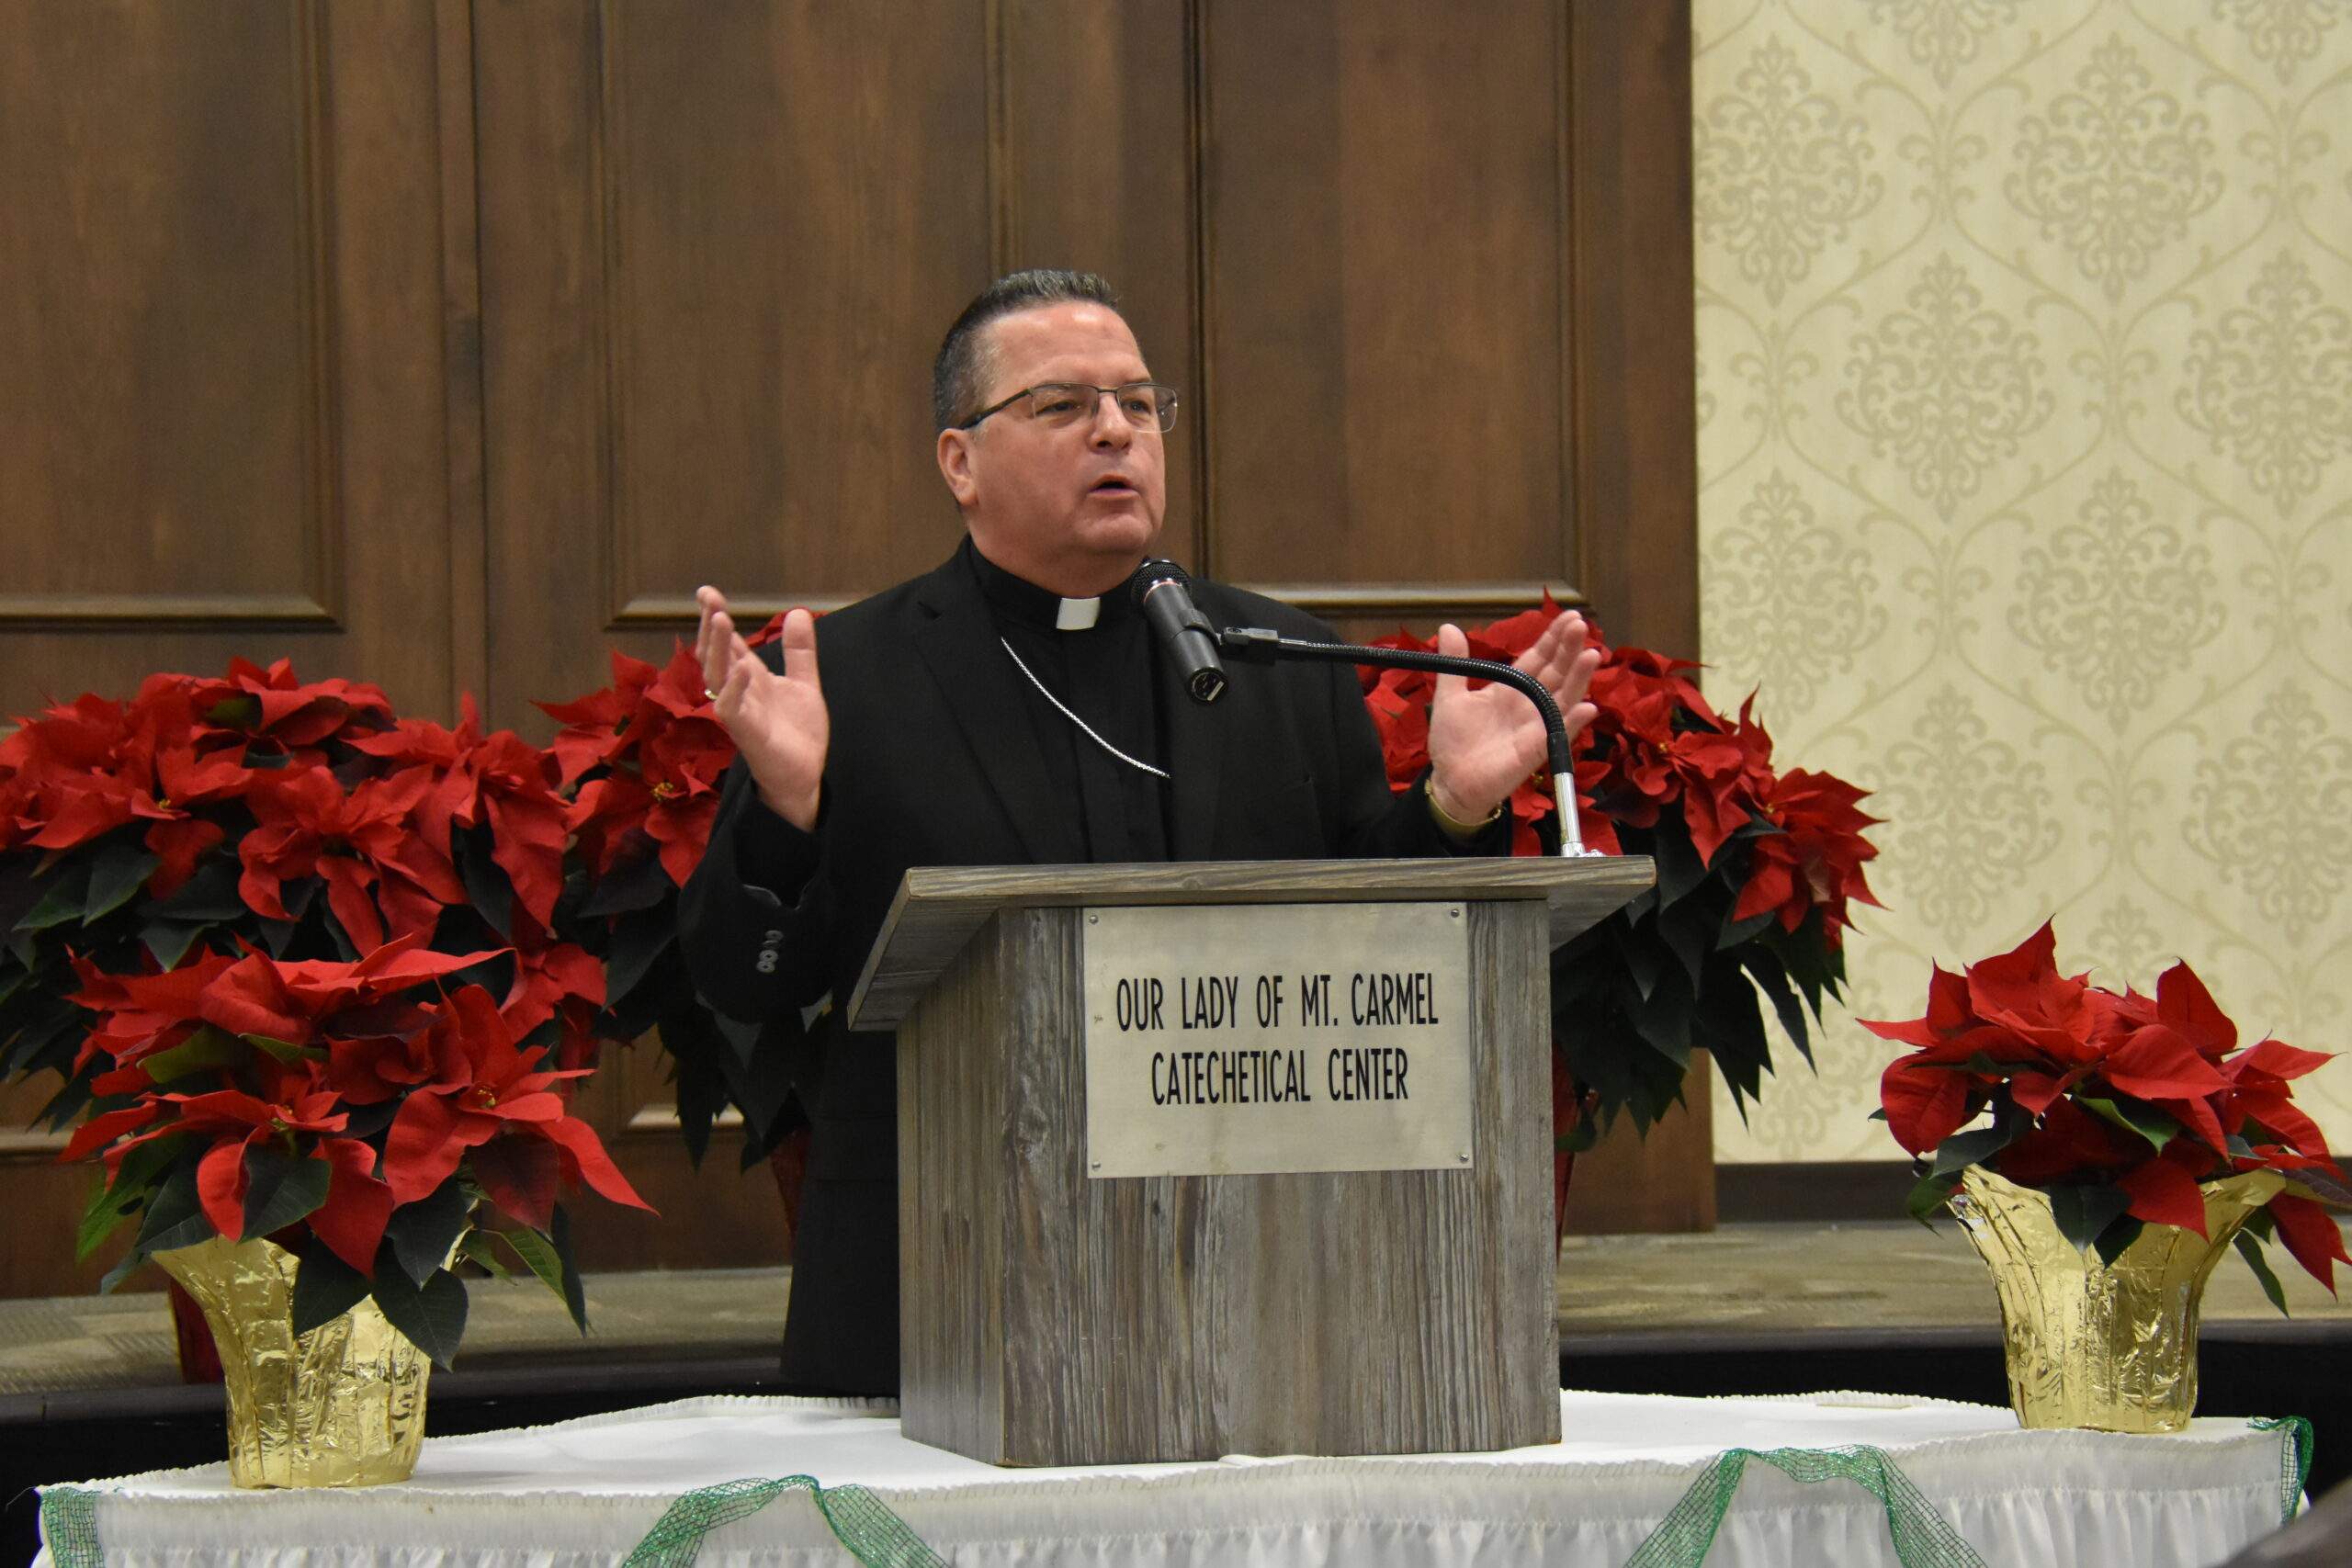 Bishop David J. Bonnar speaks at a podium, surrounded by poinsettias